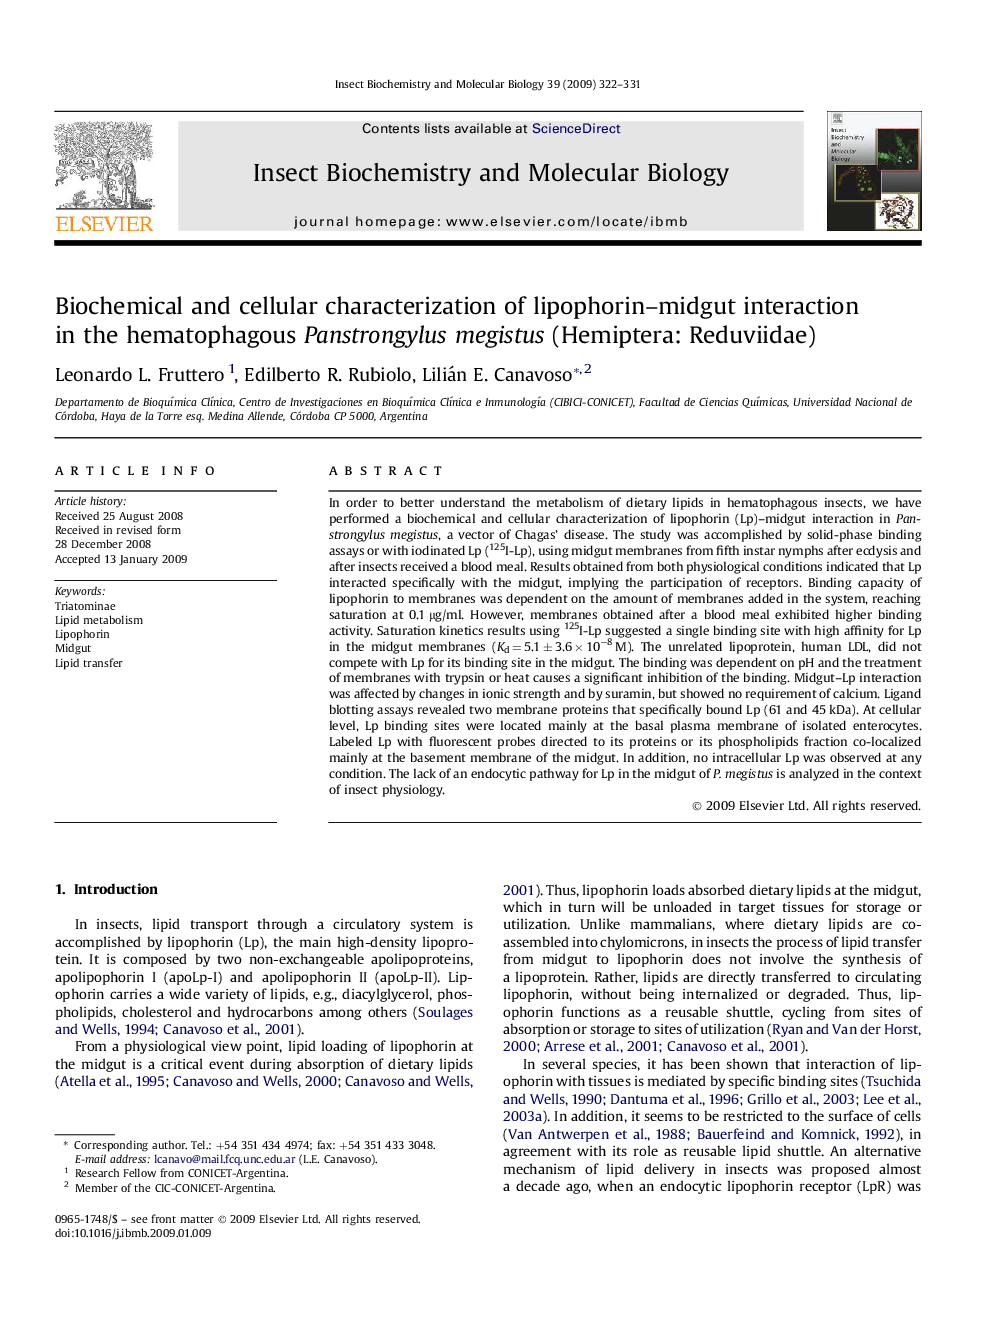 Biochemical and cellular characterization of lipophorin–midgut interaction in the hematophagous Panstrongylus megistus (Hemiptera: Reduviidae)